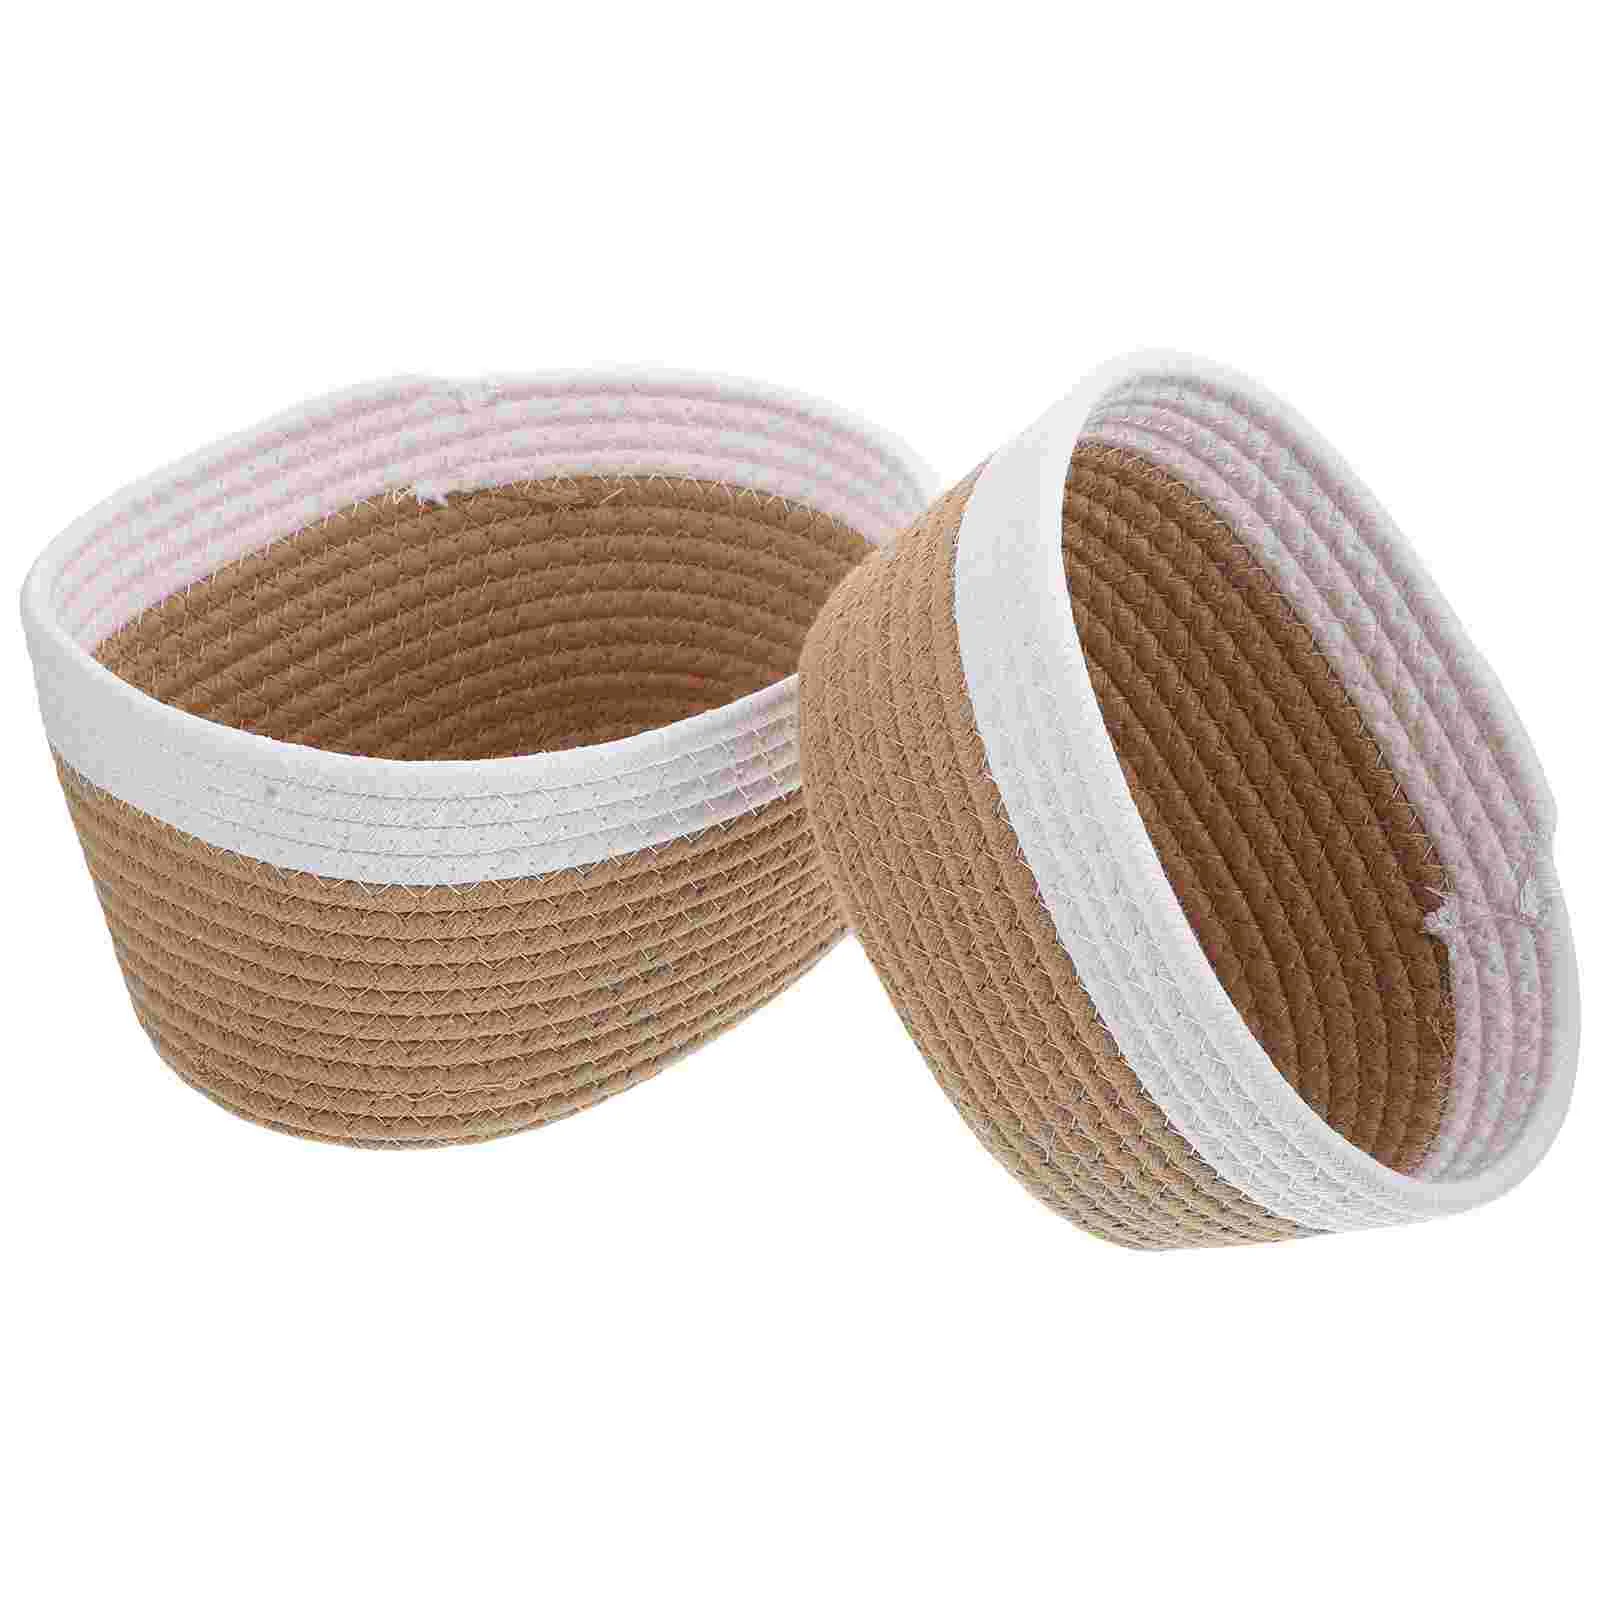 

2 Pcs Blanket Storage Basket Woven Household Snack Holder Bedroom Sundries Grocery Cotton Rope Weaving Baskets Makeup